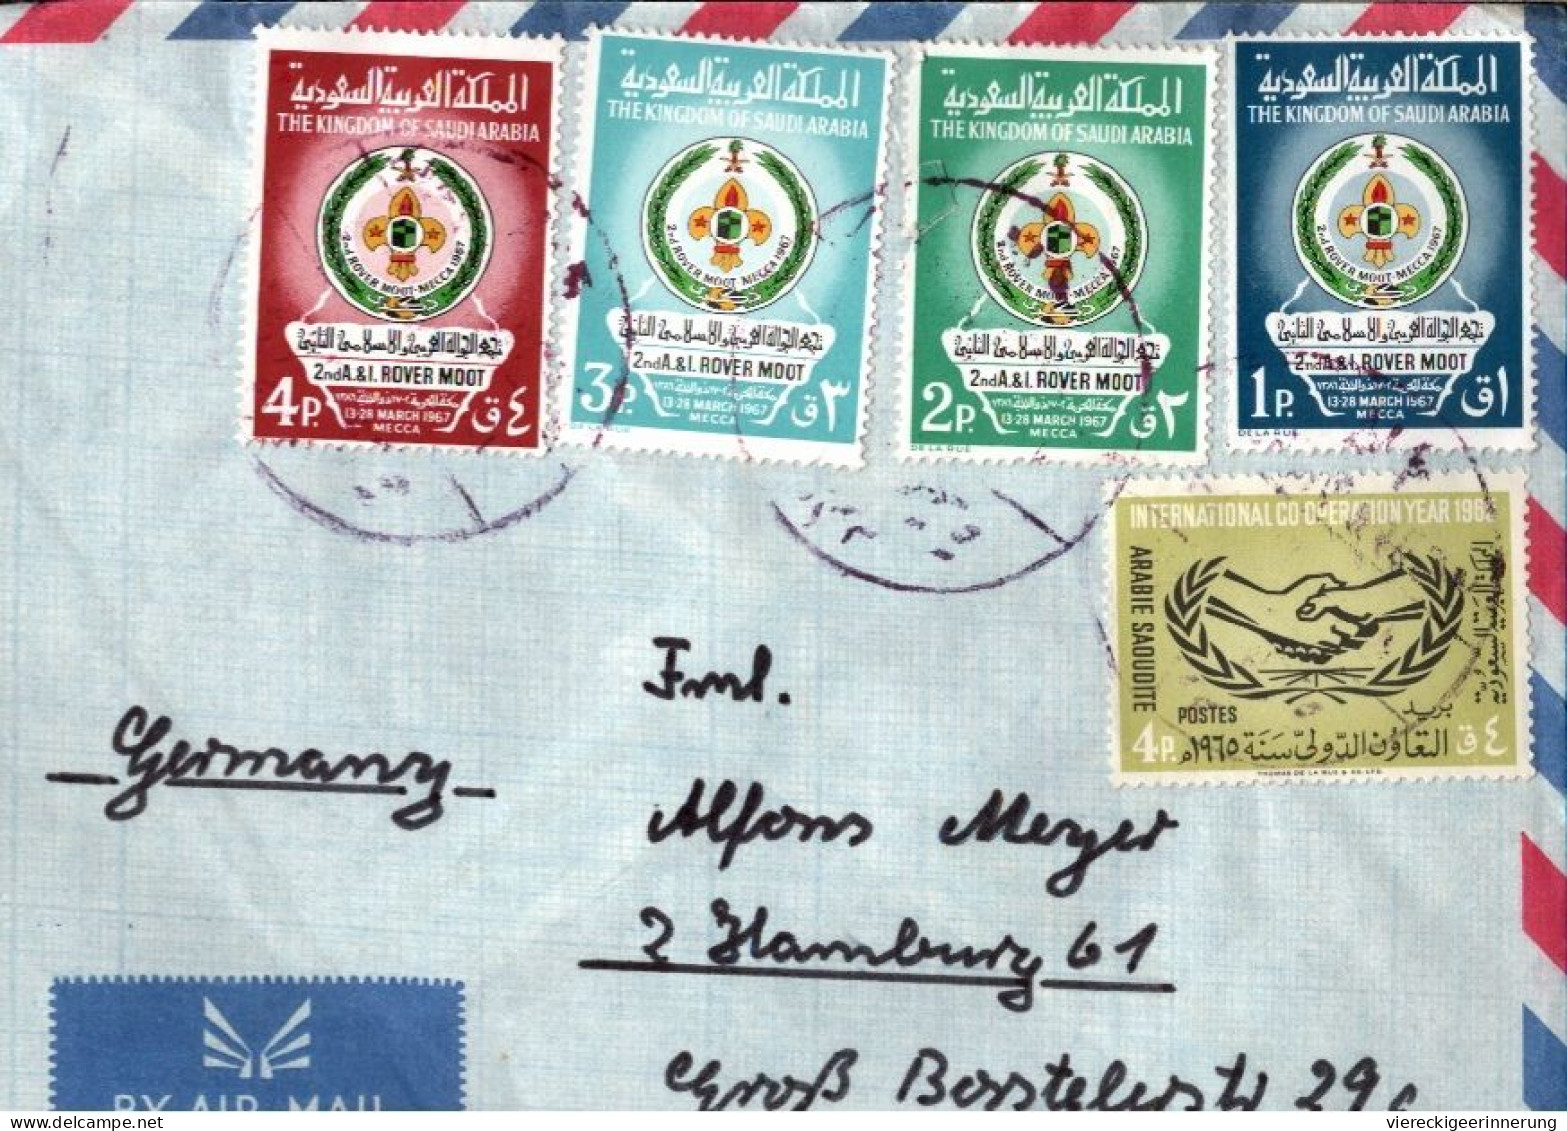 ! Luftpostbrief, Airmail Cover, 1967 Aus Jeddah, Saudi Arabia, Boyscout Stamps - Arabie Saoudite